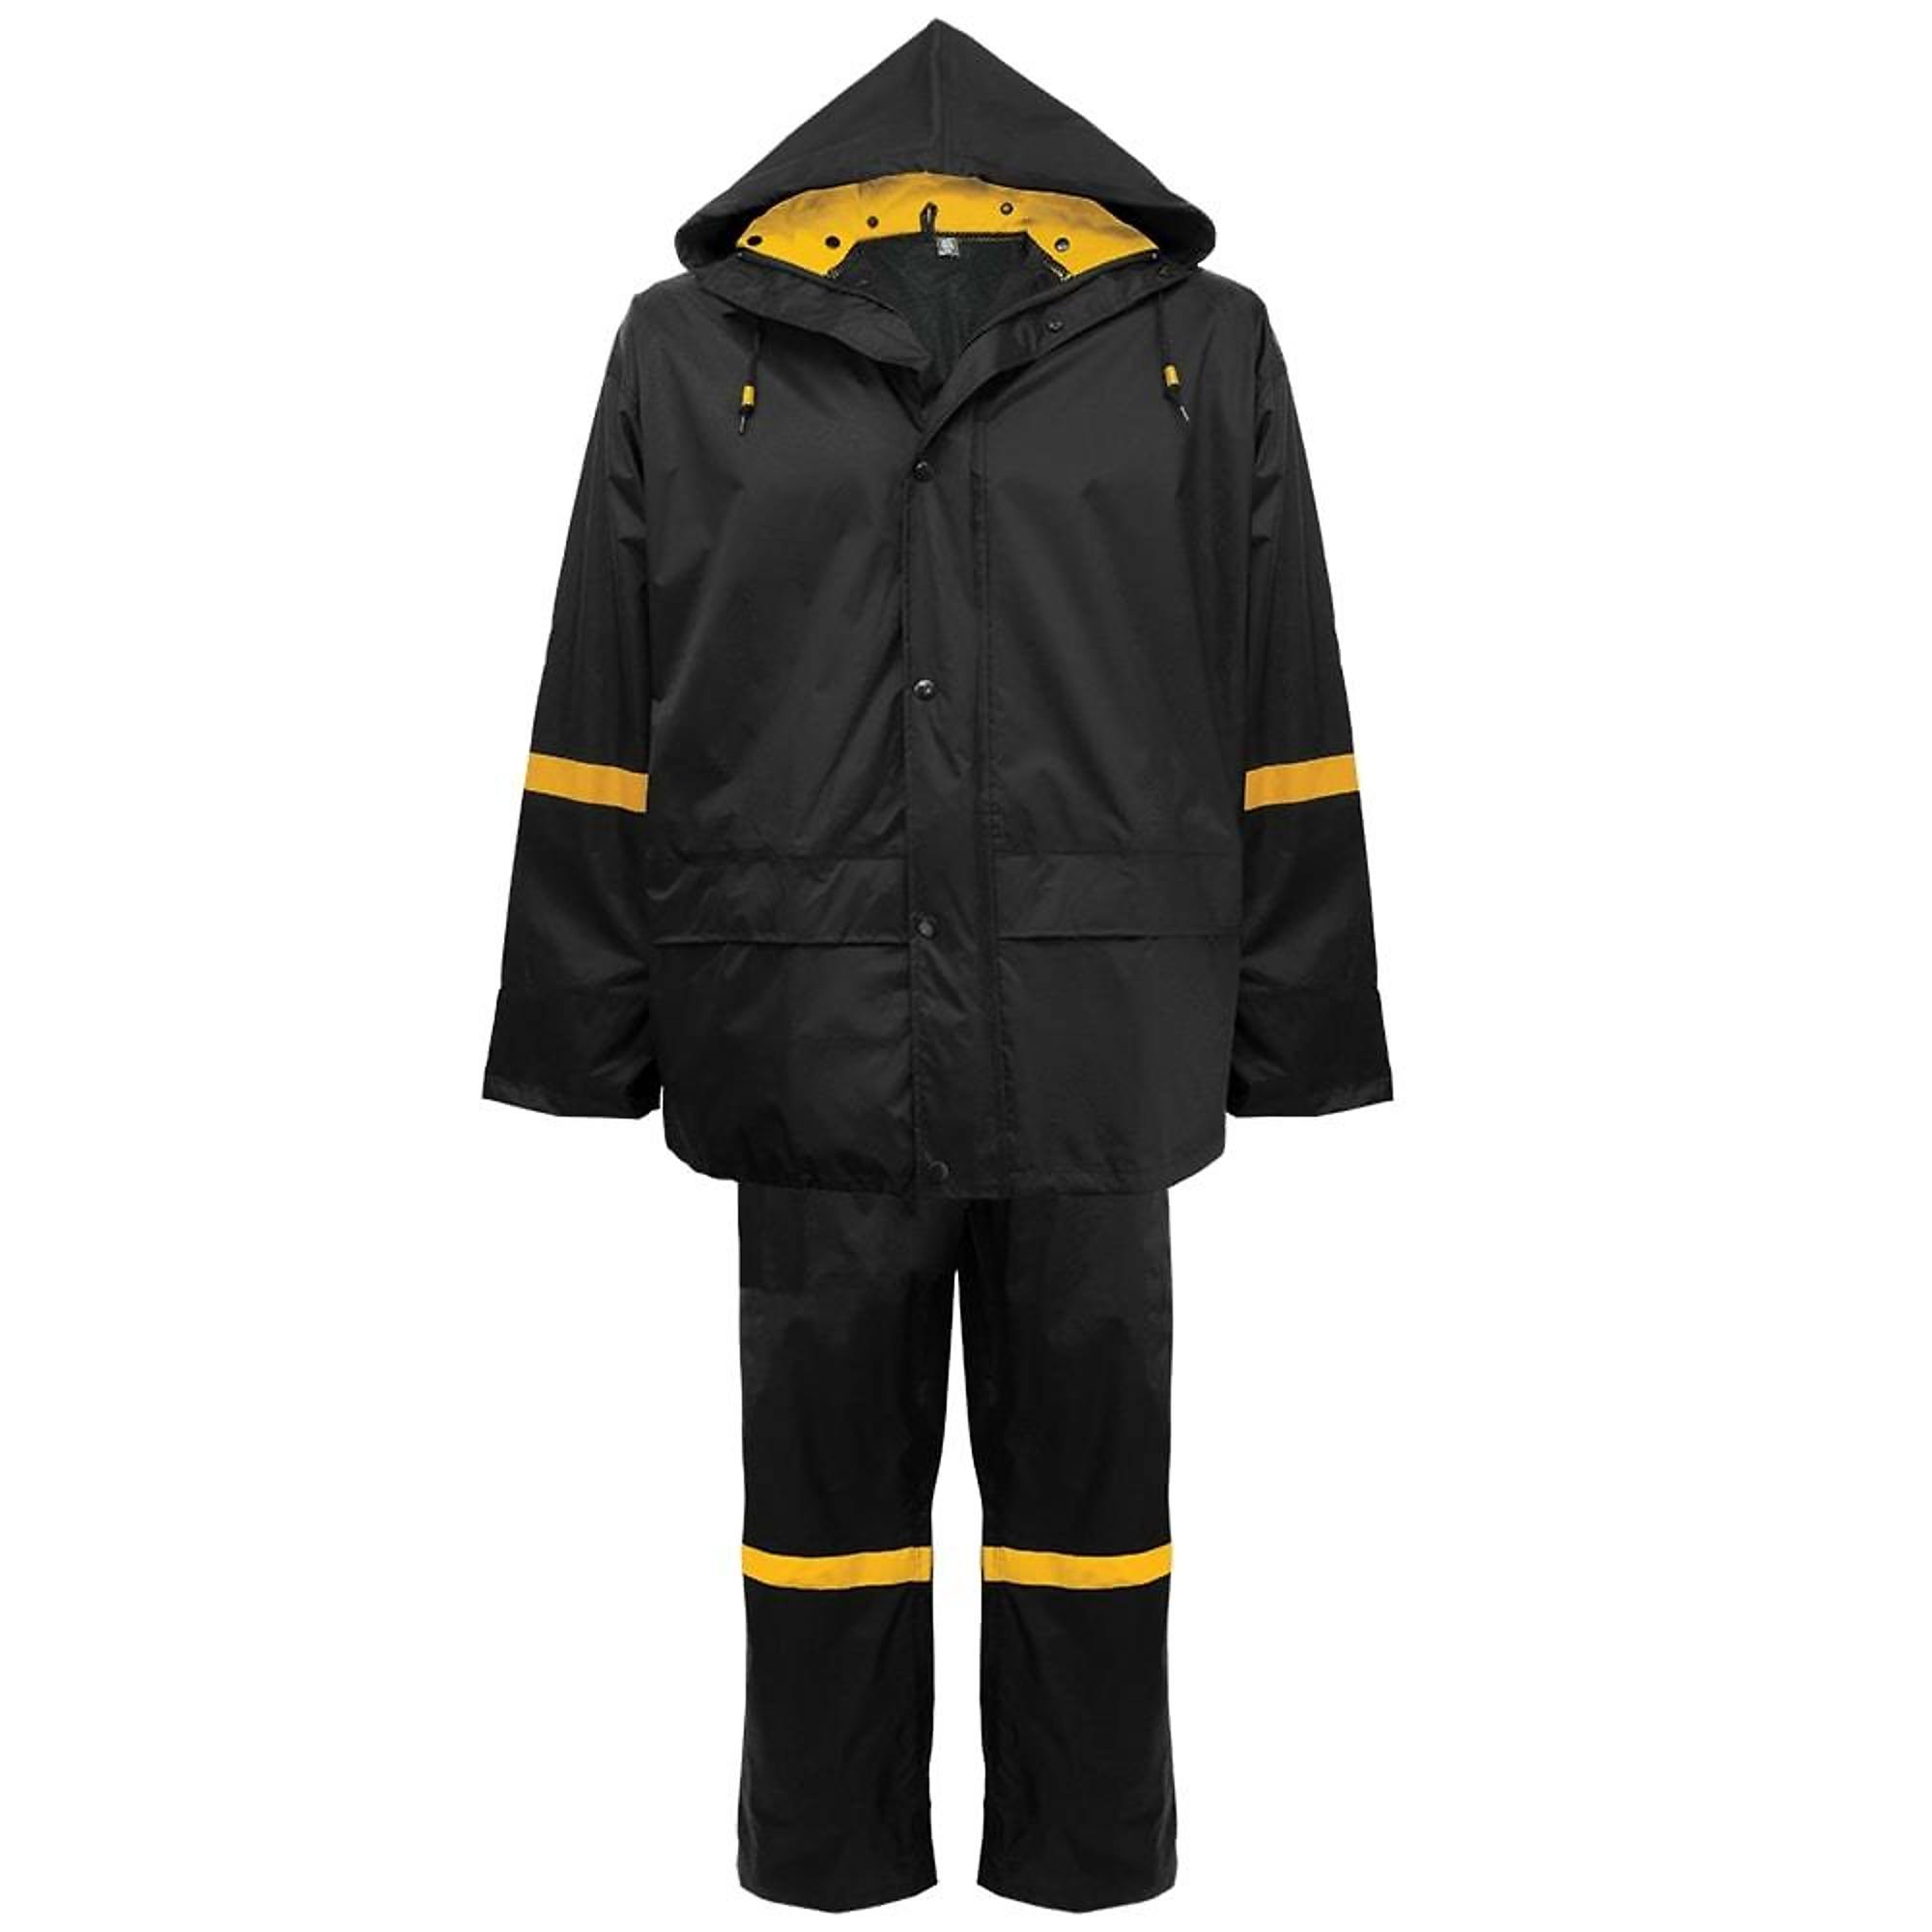 FrogWear, Black, PVC Coated, Nylon Three-Piece Rain Suit, Size 3XL, Color Black/Yellow, Model R6400-3XL